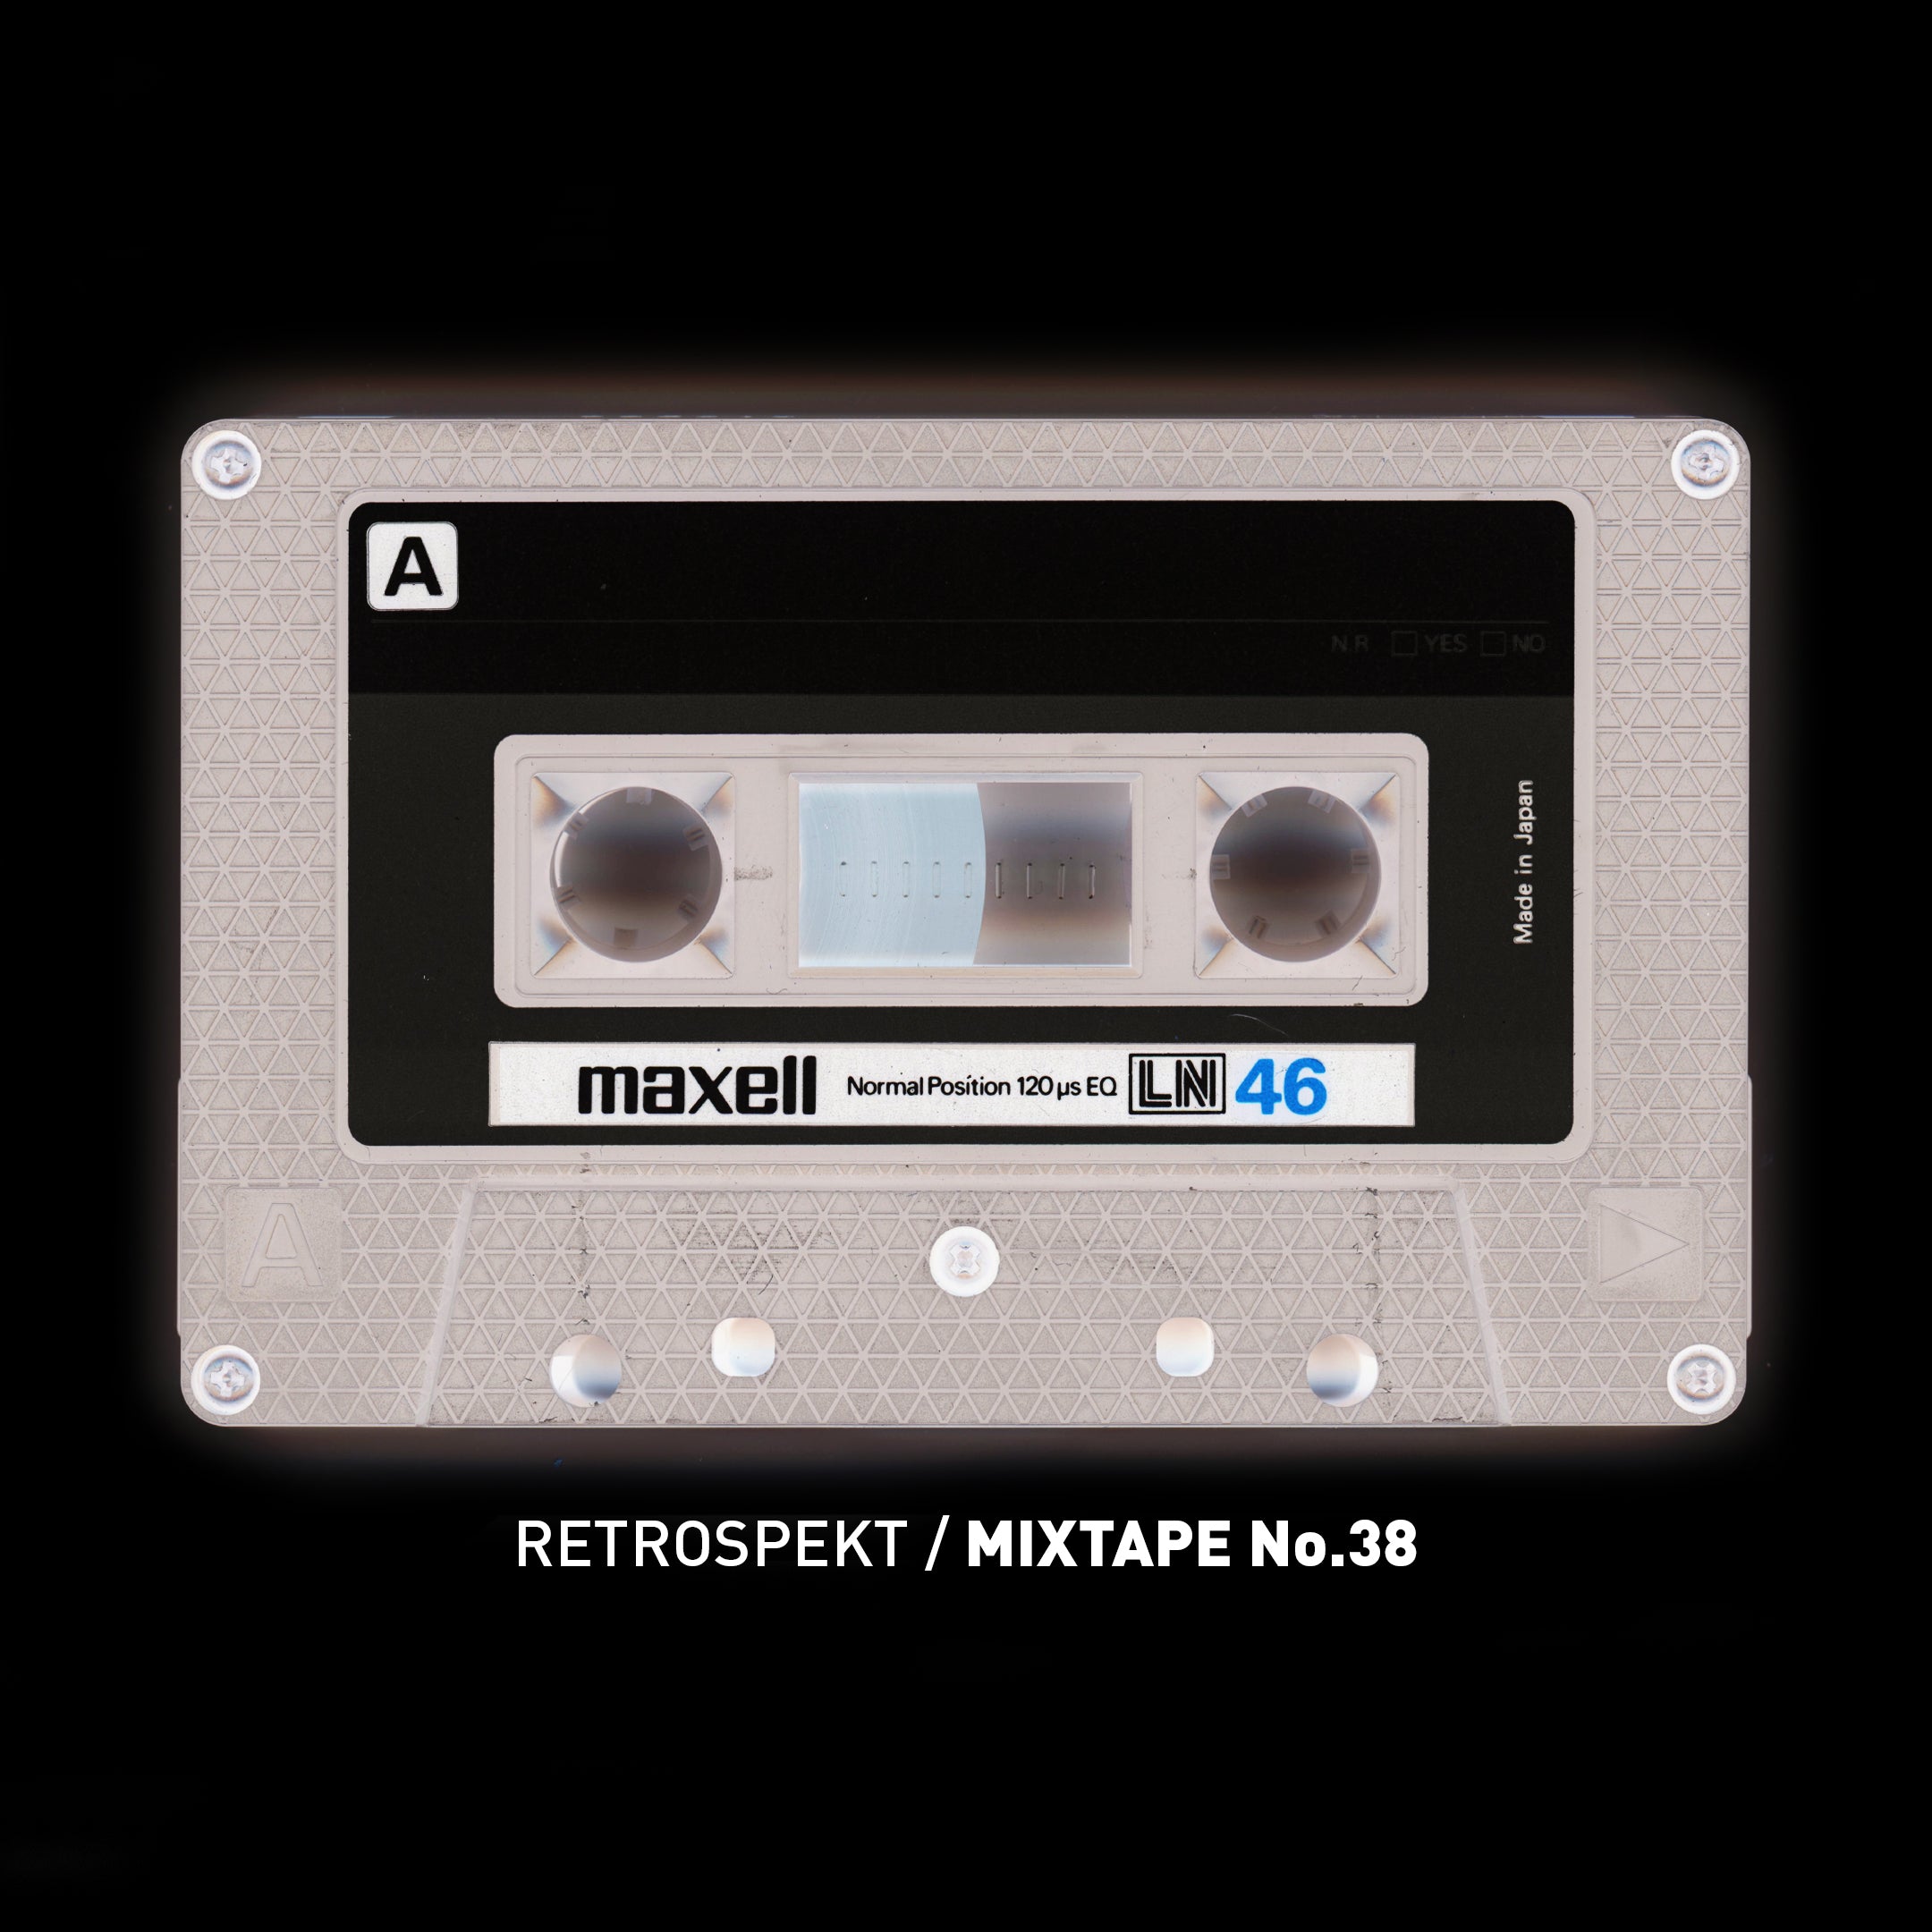 Retrospekt Mixtape No. 38